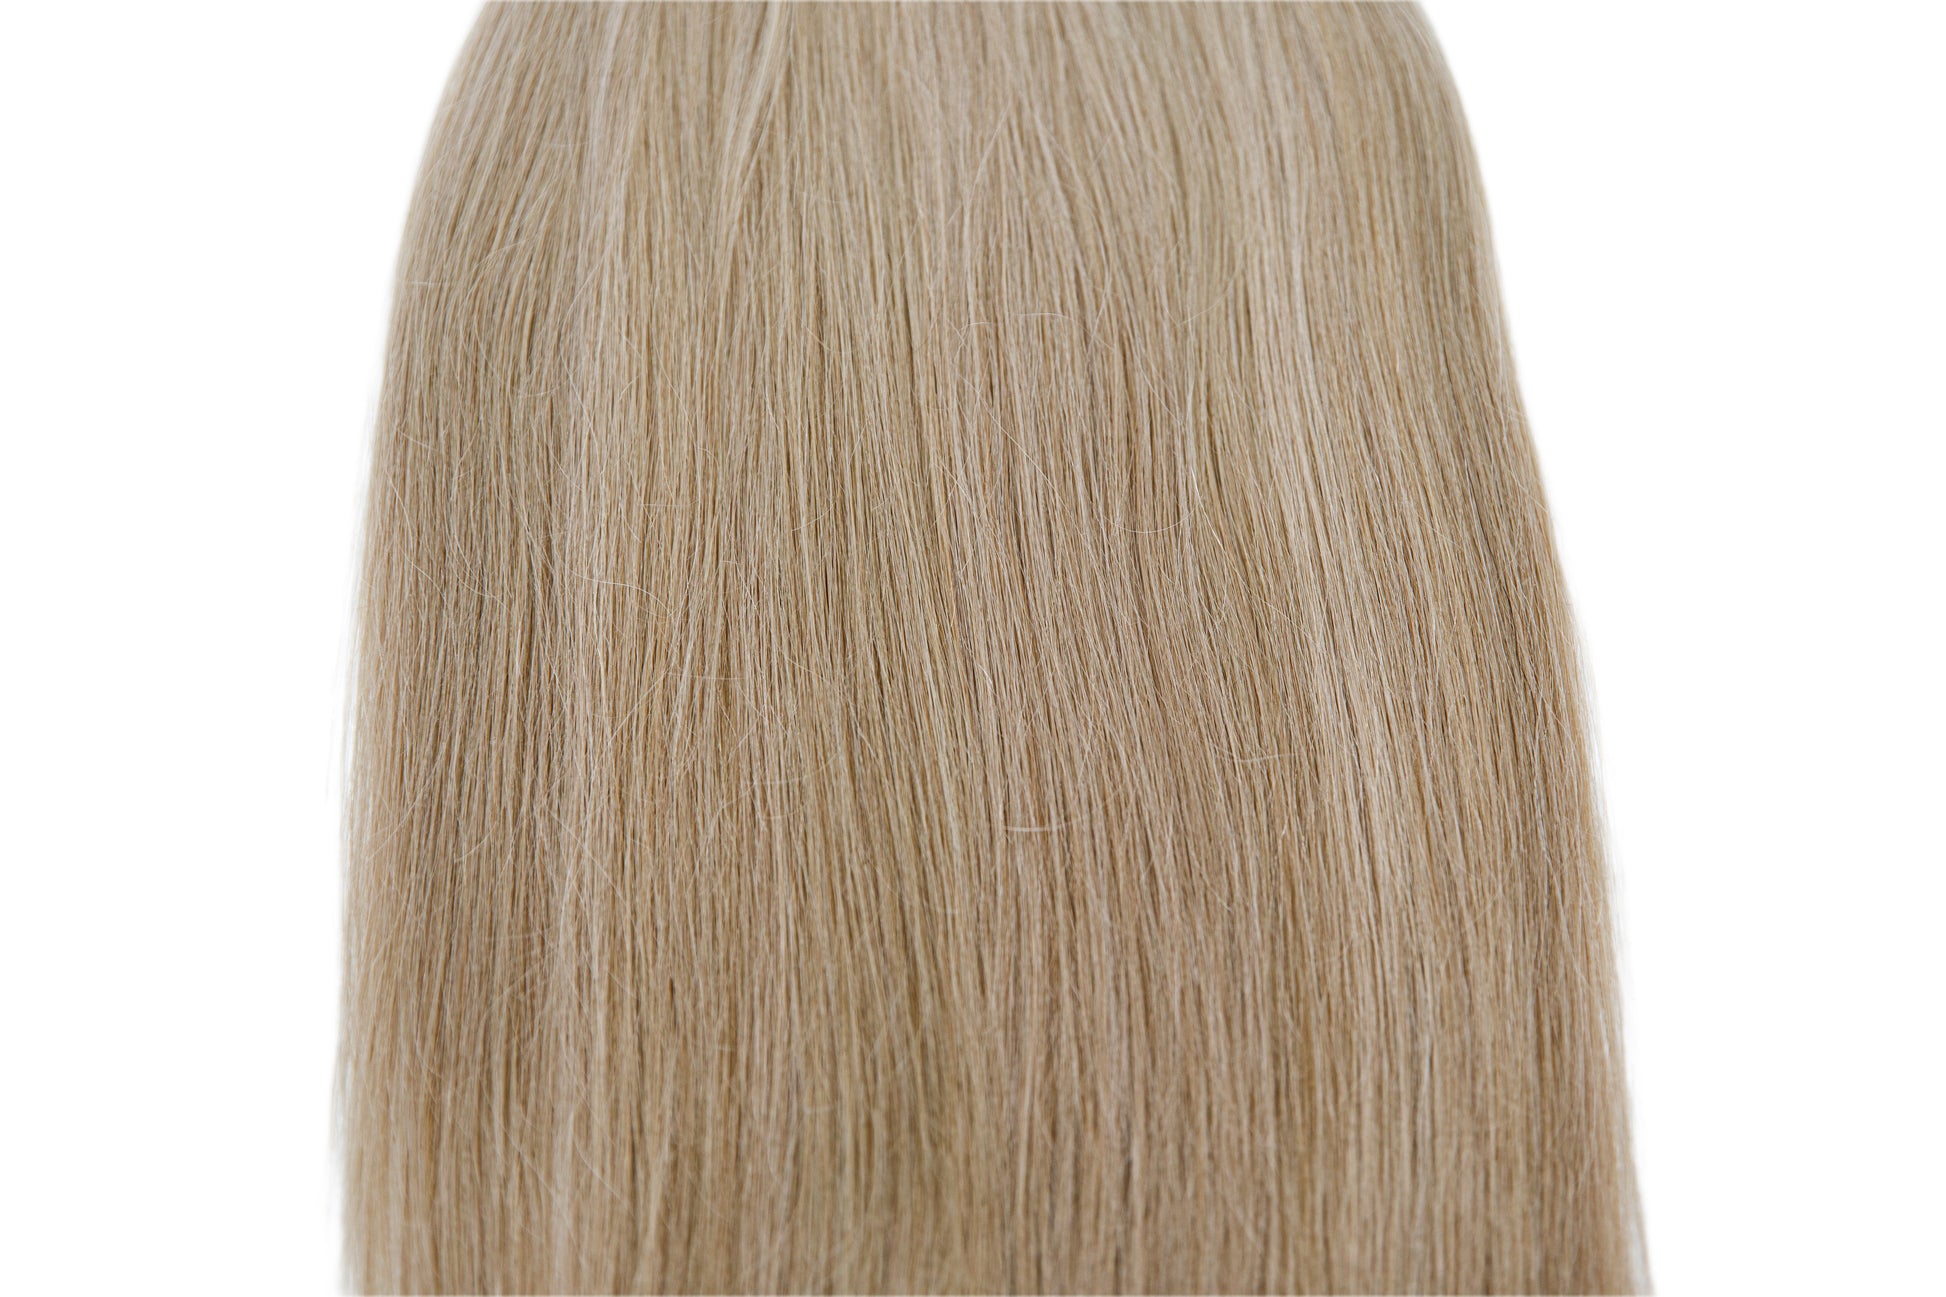 1. Long blonde boho hair with braids - wide 2